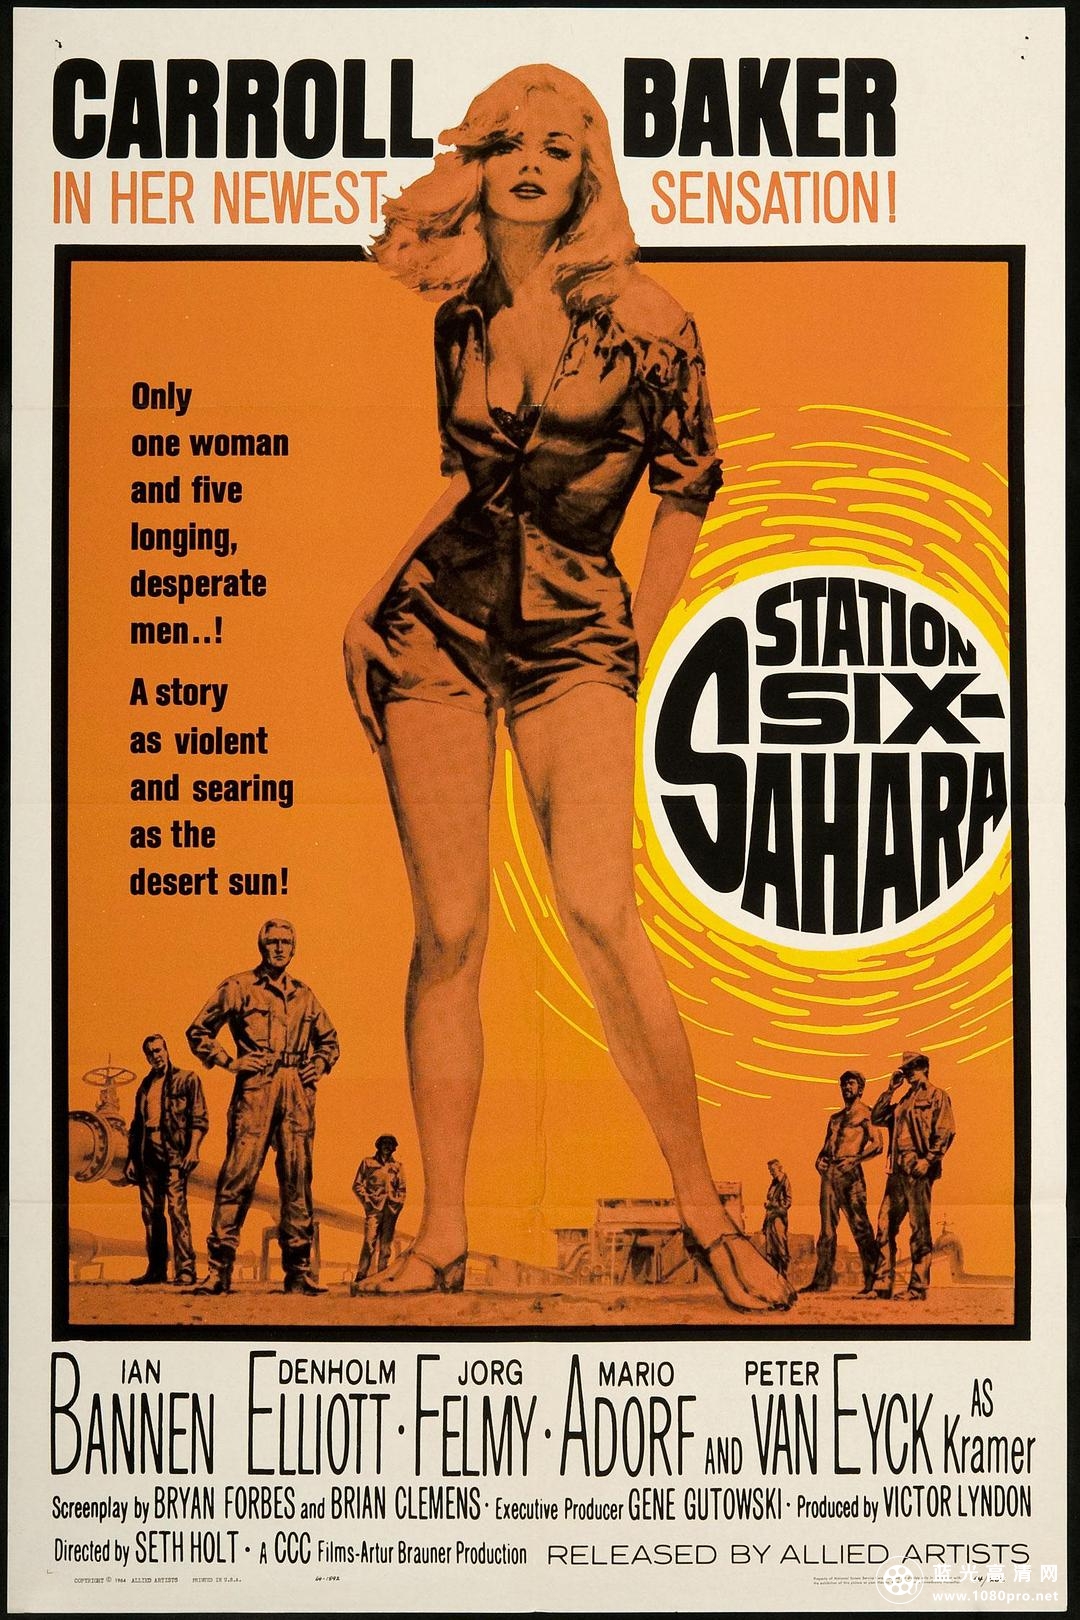 撒哈拉六号基地 Station.Six-Sahara.1963.720p.BluRay.x264-SPOOKS 4.38GB